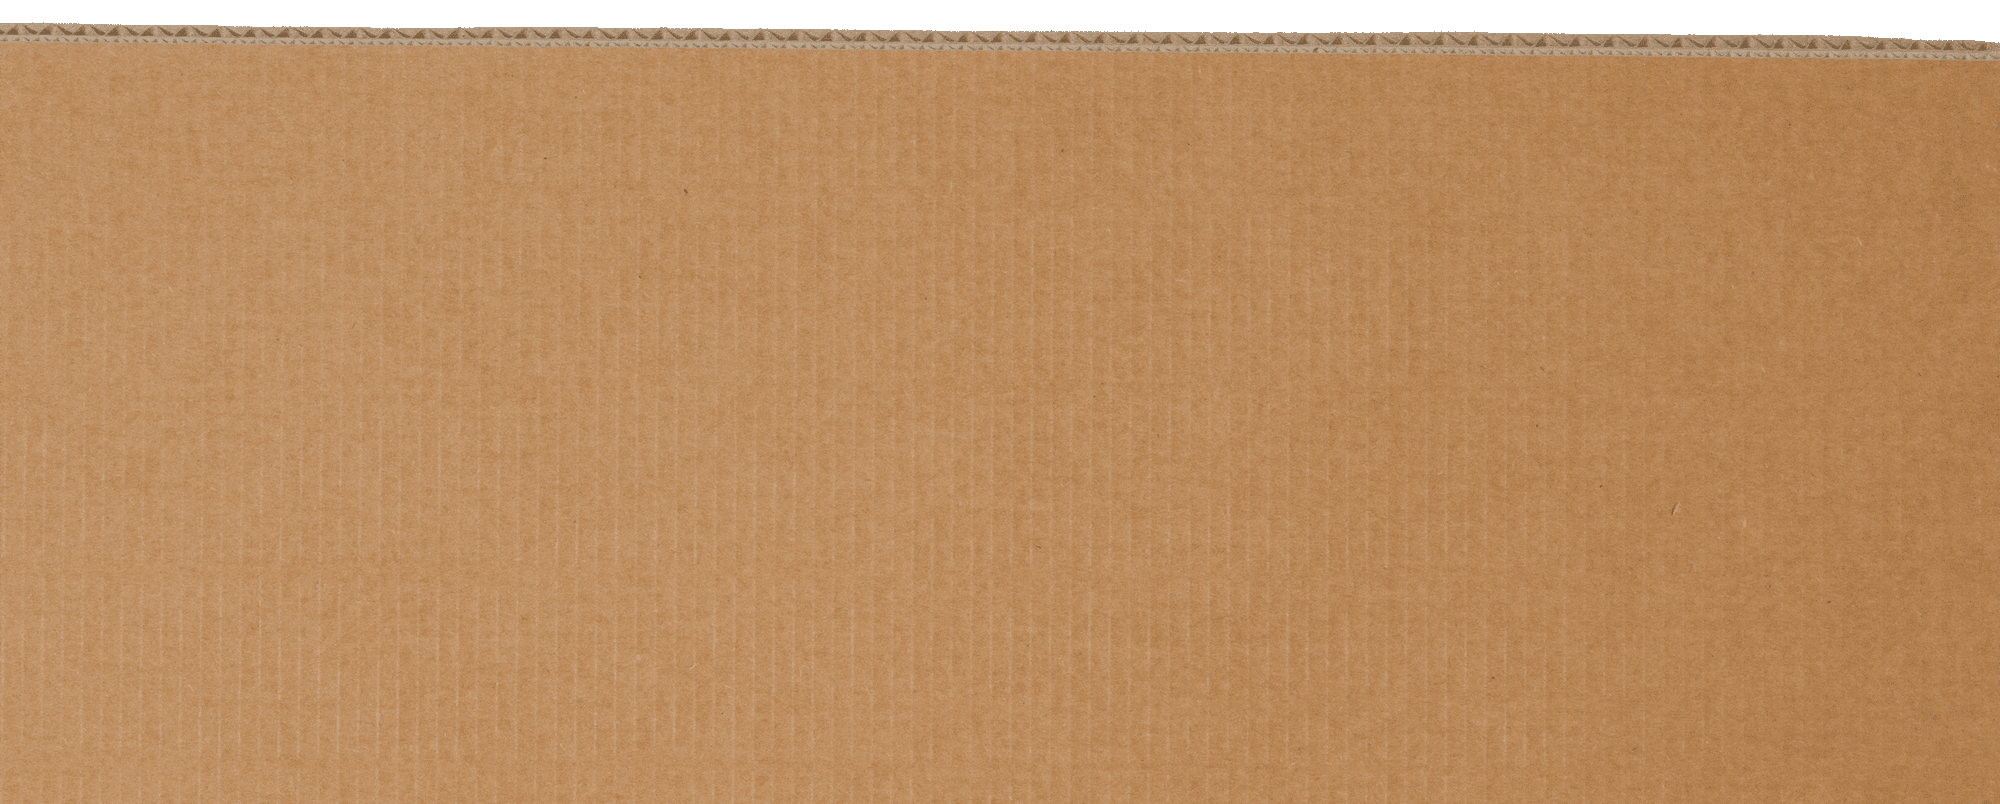 Makedo Toolkit for Cardboard Construction